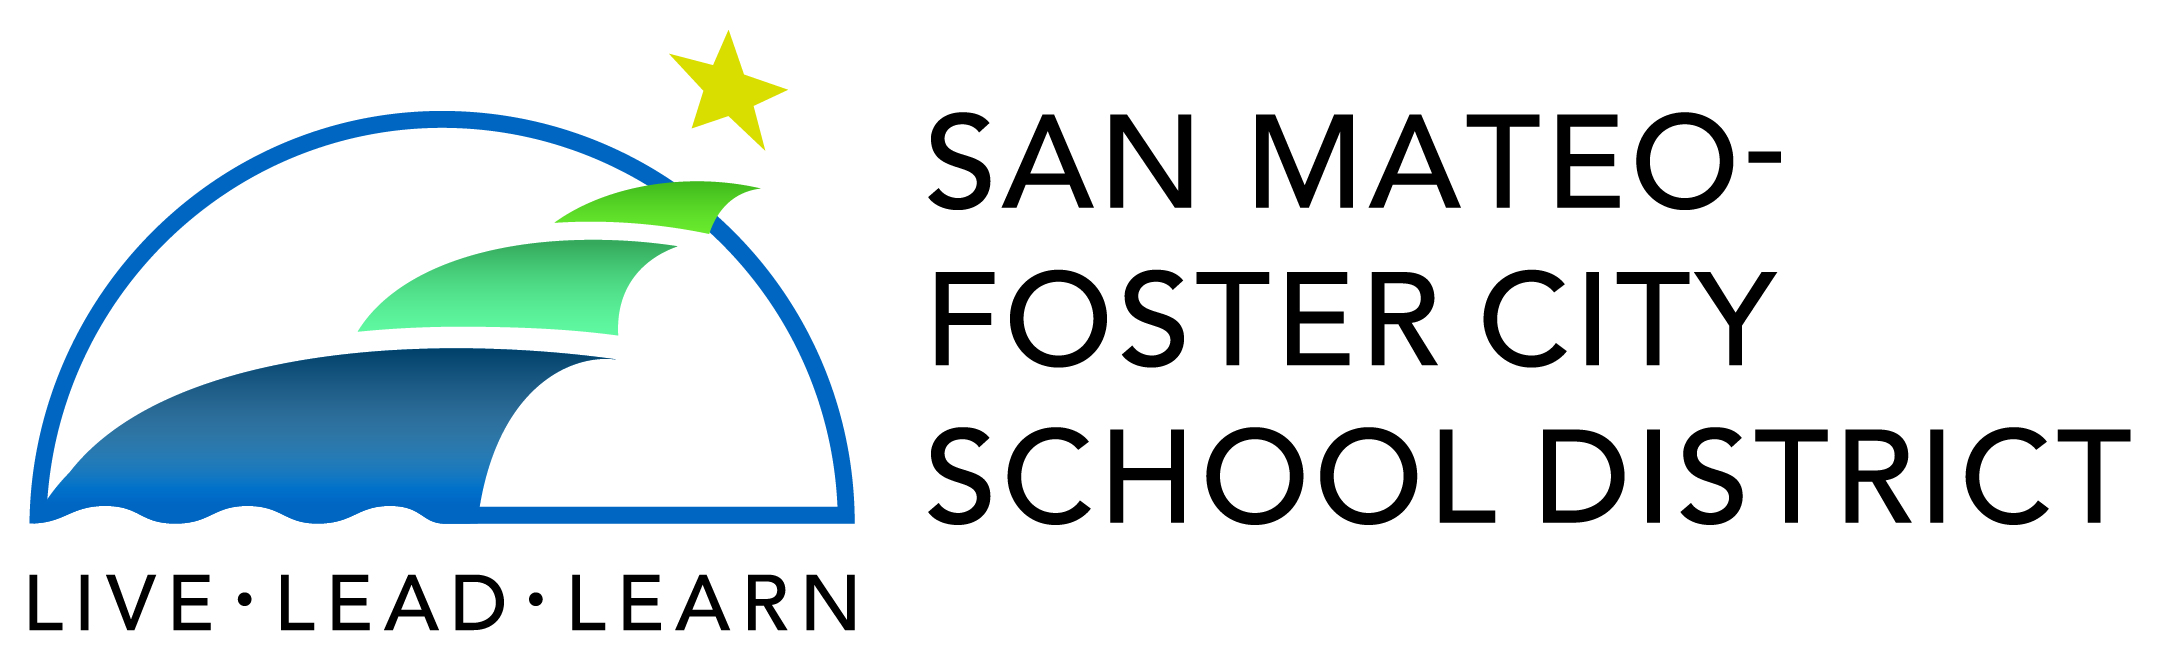 San Mateo-Foster City School District Logo